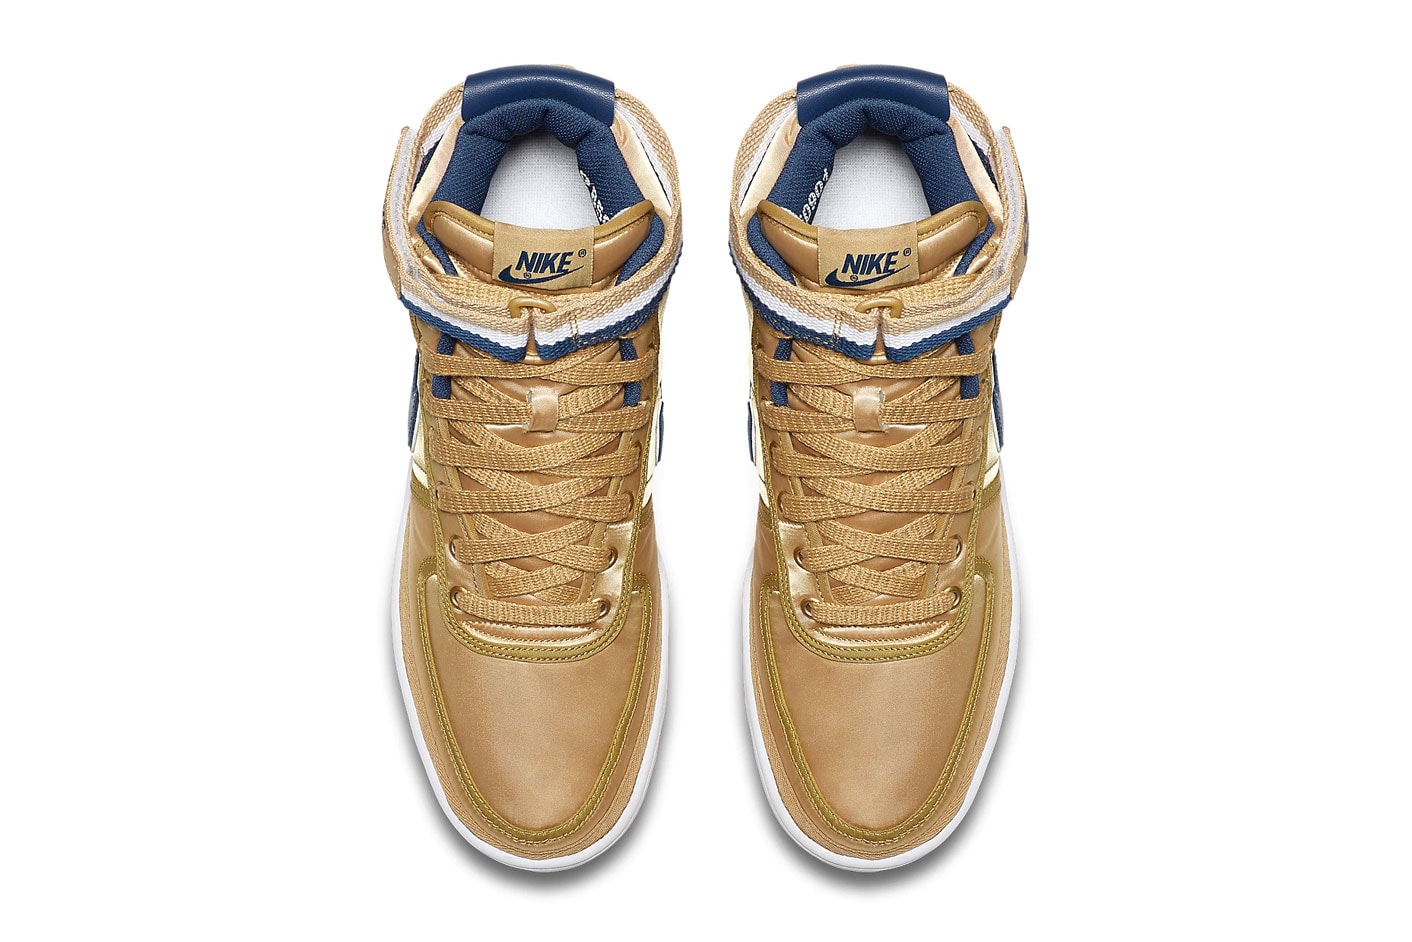 Nike Vandal High Supreme "Gold/Navy" swoosh